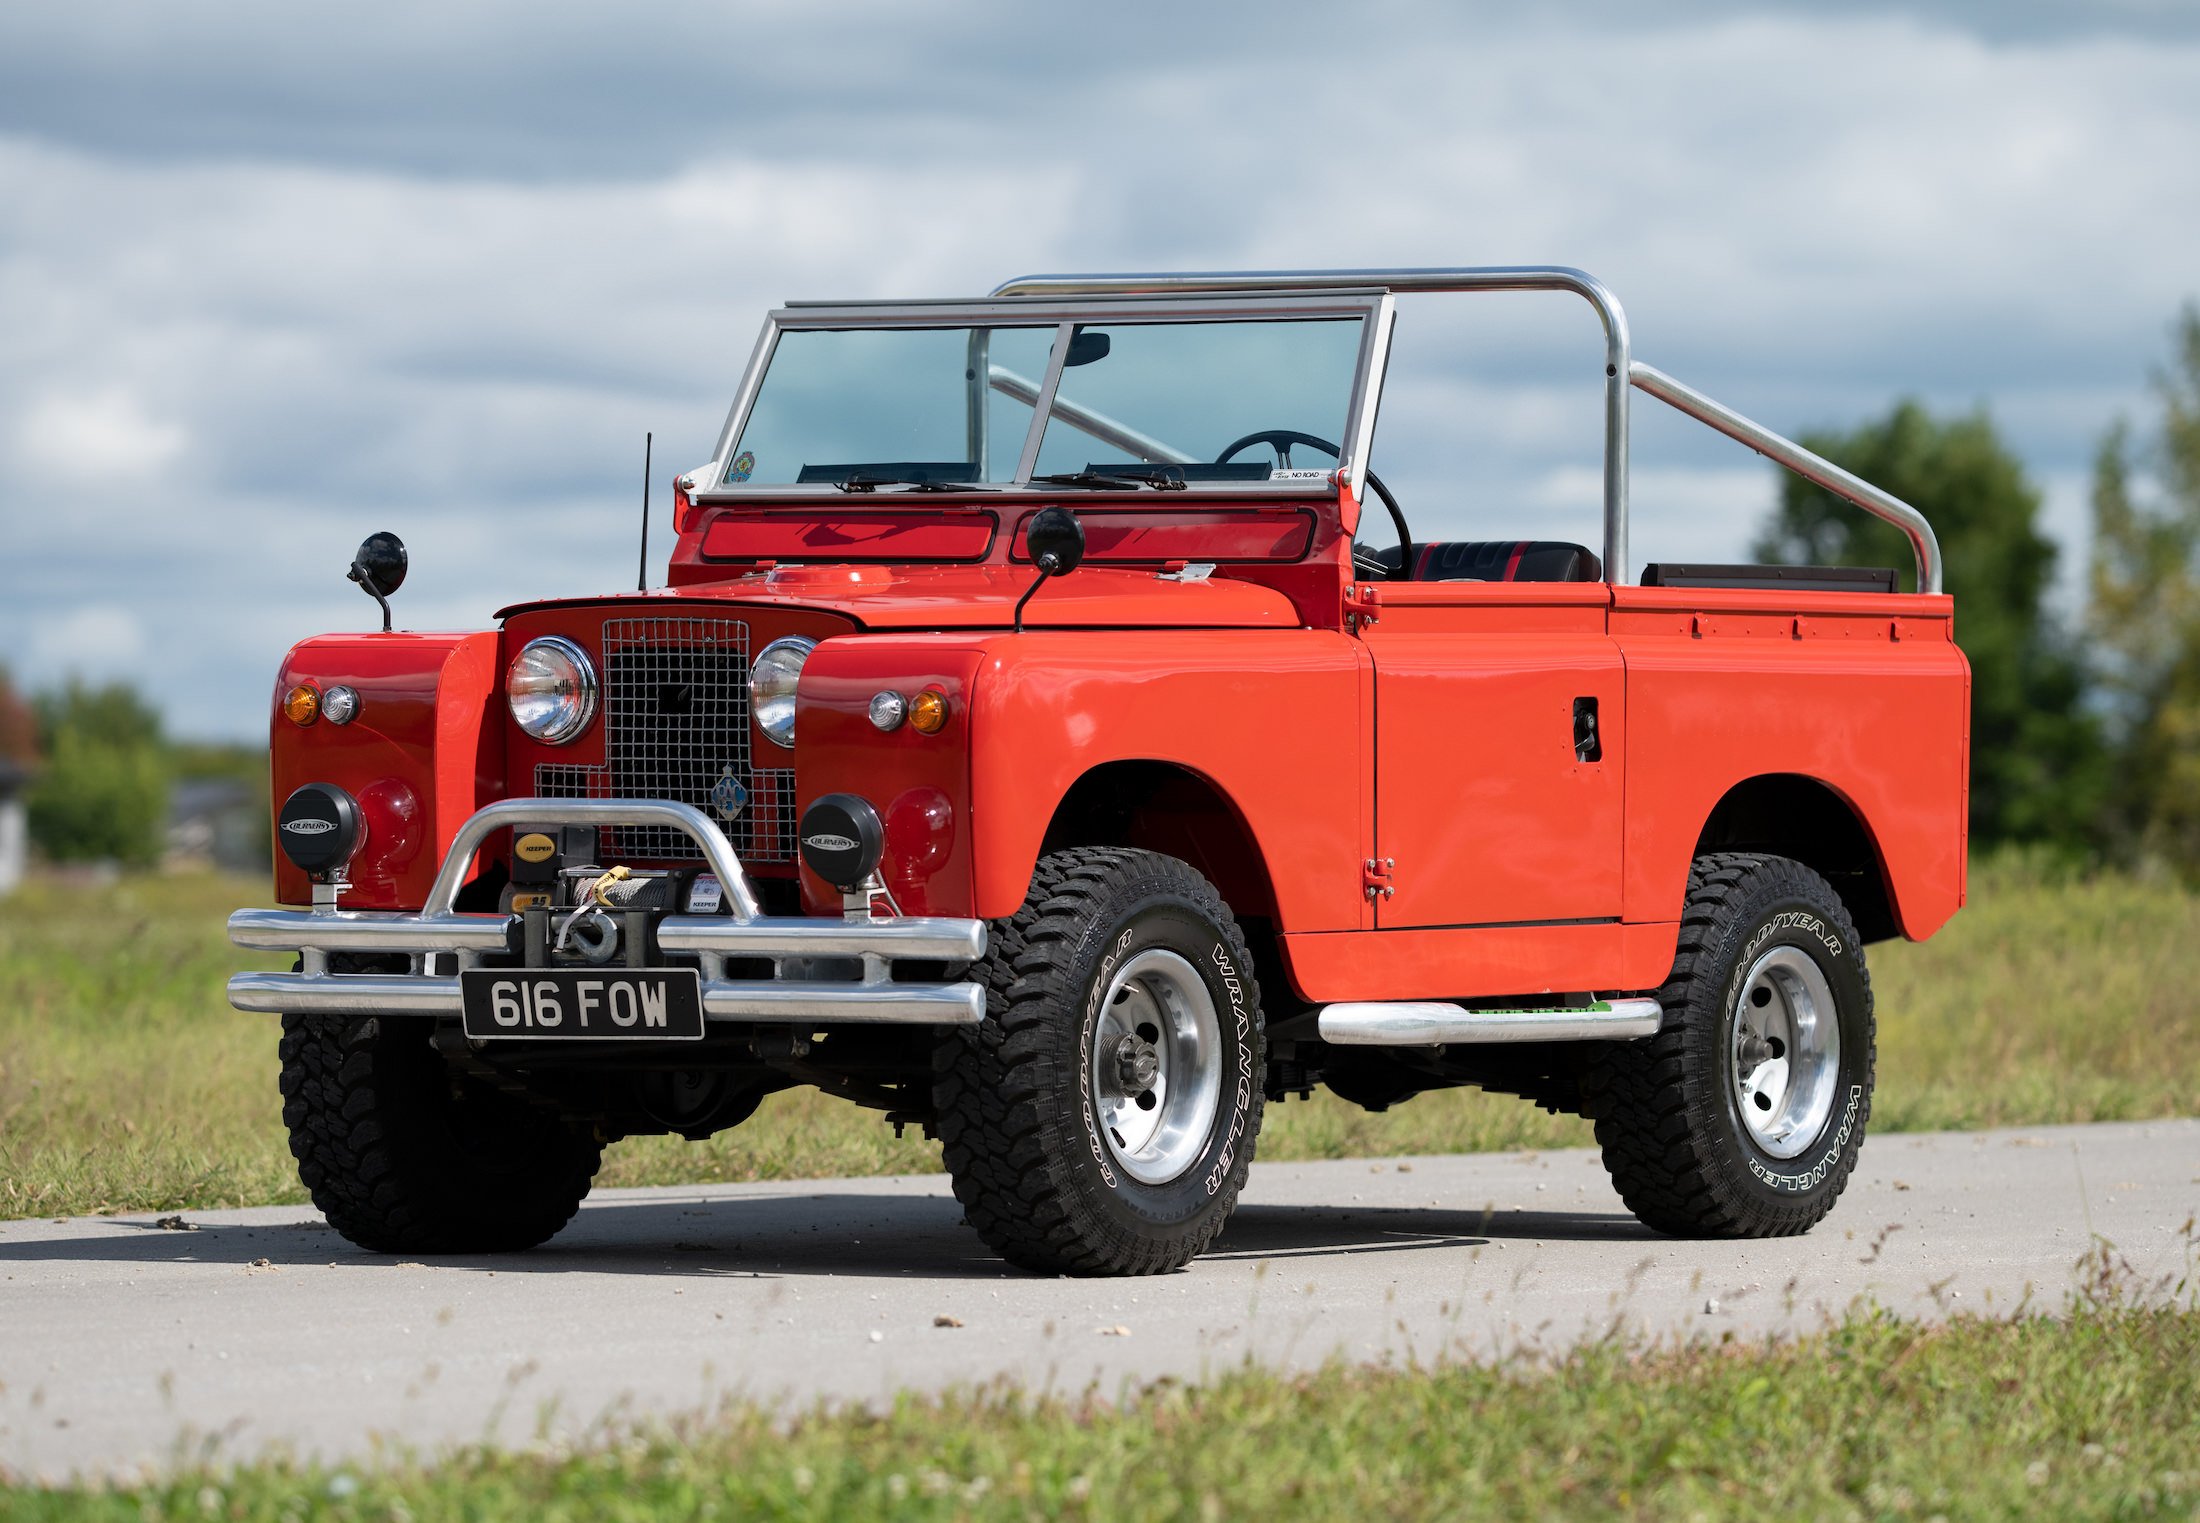 For Sale: An Adventure Ready Land Rover Series IIA via @Silodrome